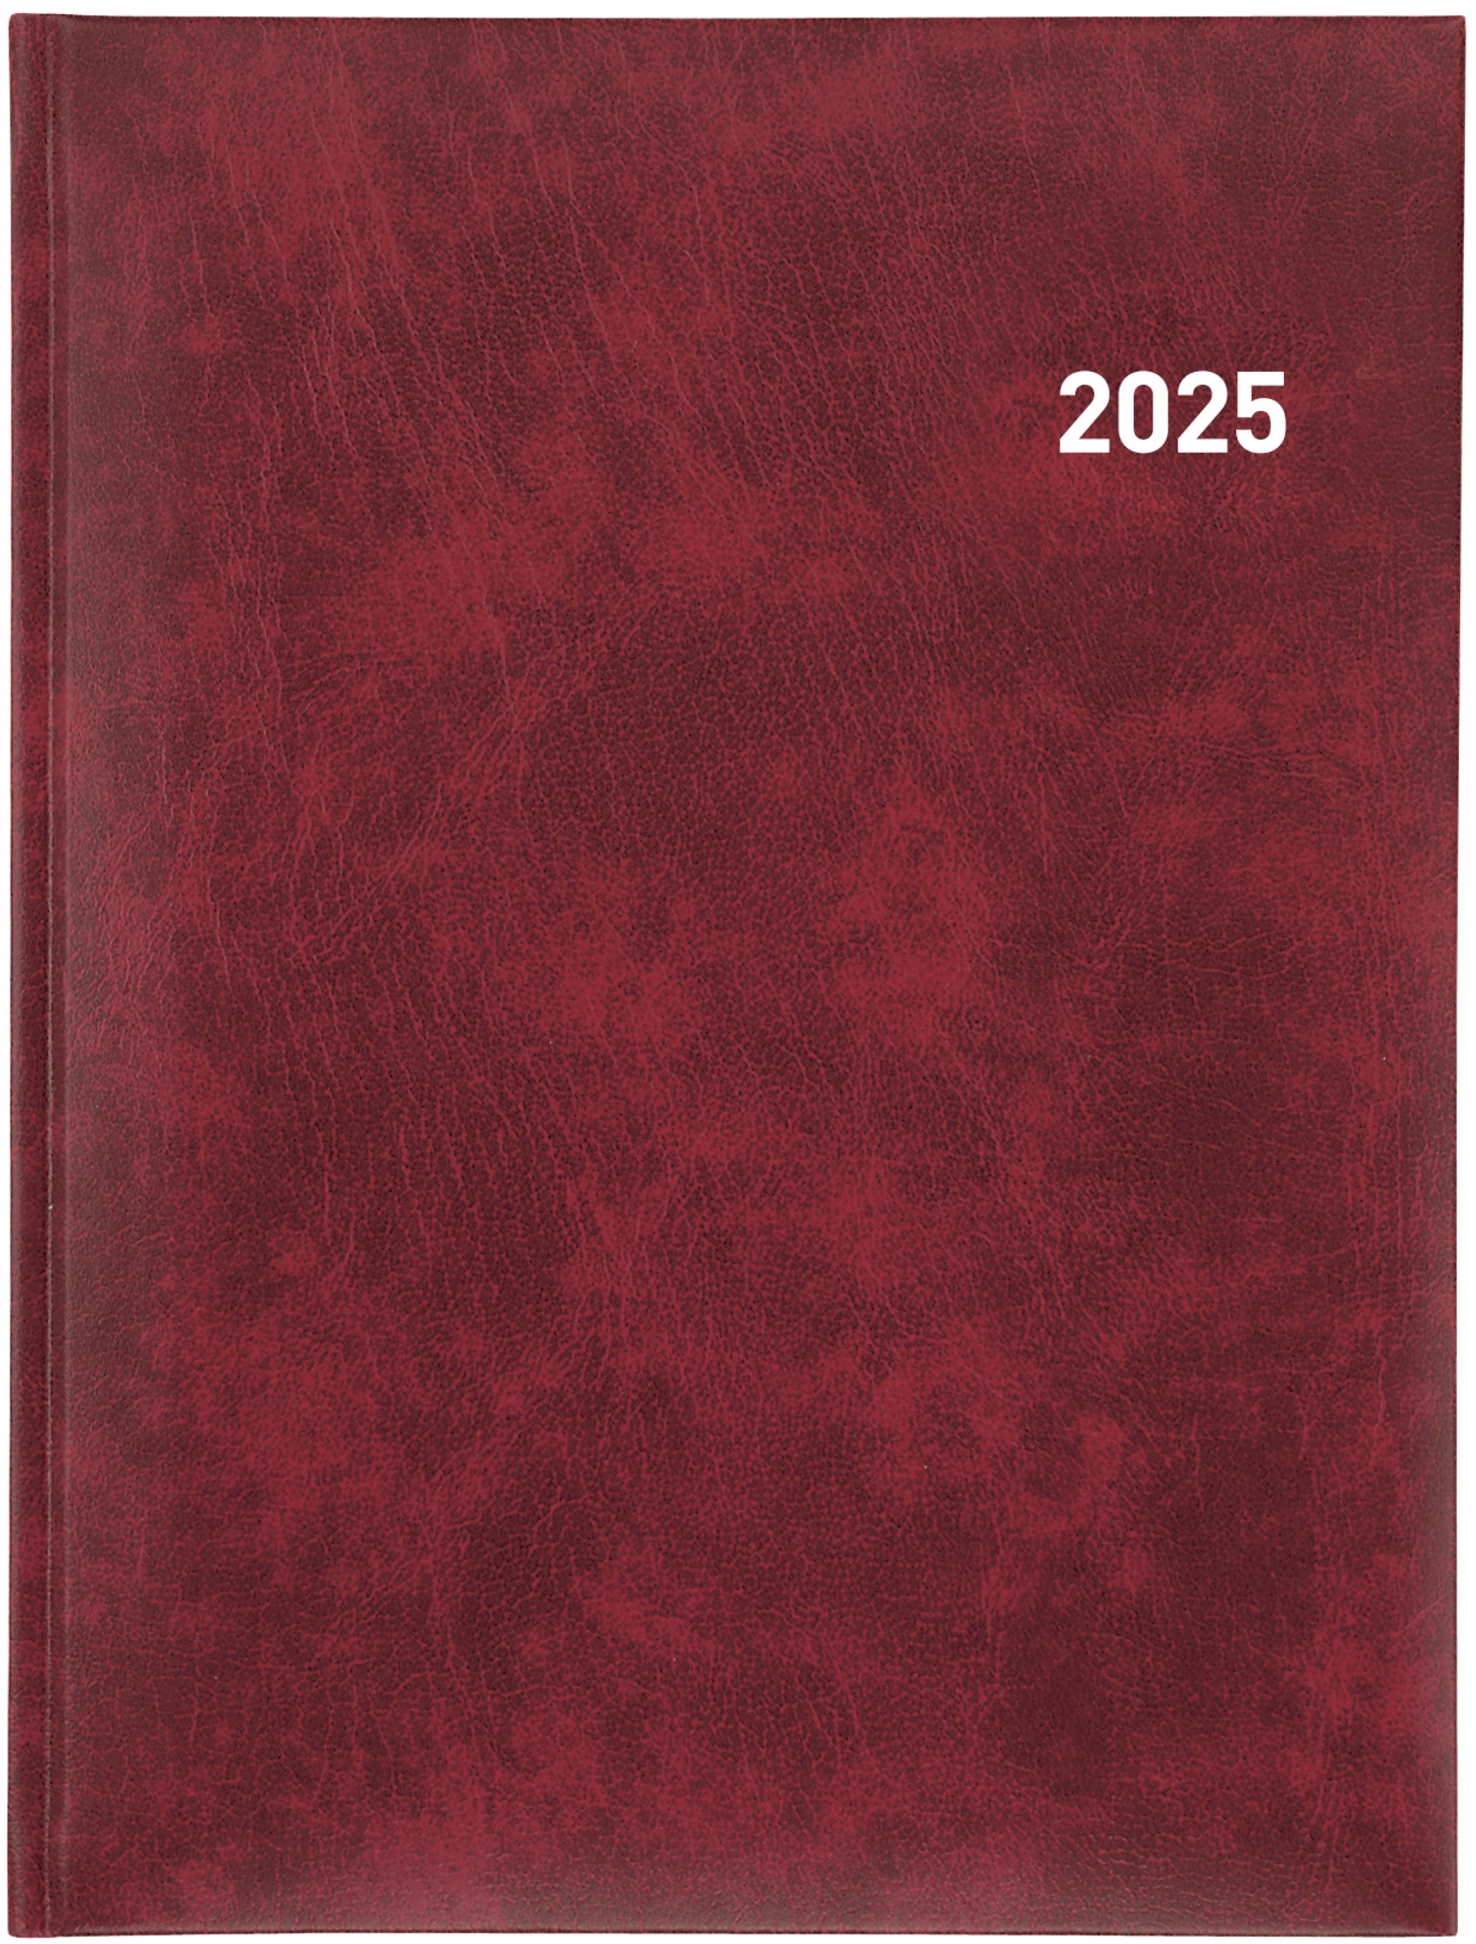 BIELLA Agenda Orario 2025 809301470025 1S/2P rouge vin ML 17.8x23.5cm